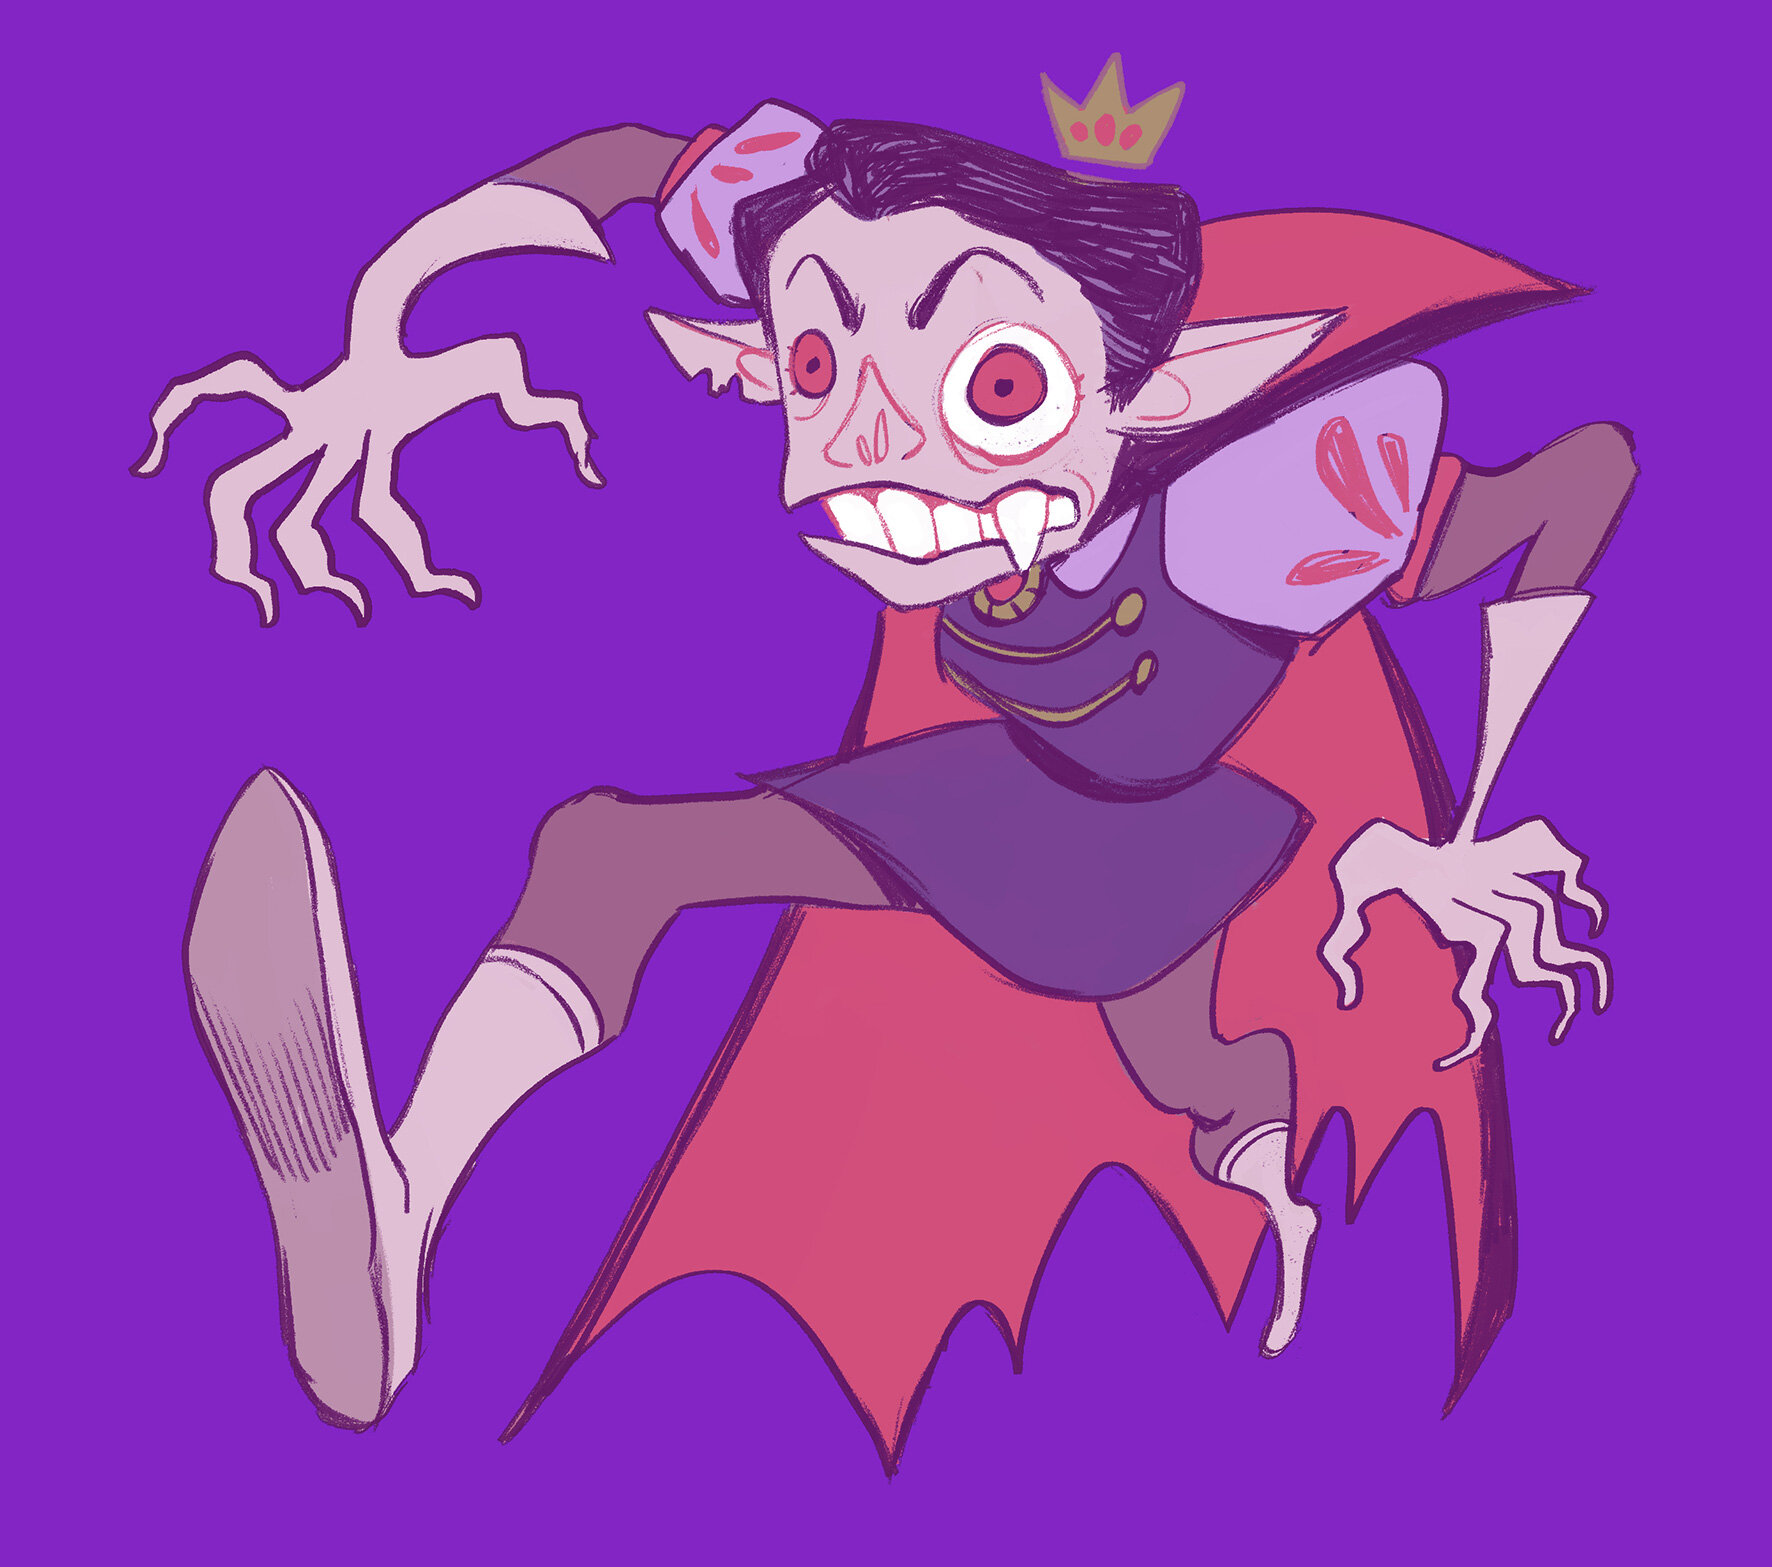 Angry-Vampire-Prince-2020.jpg